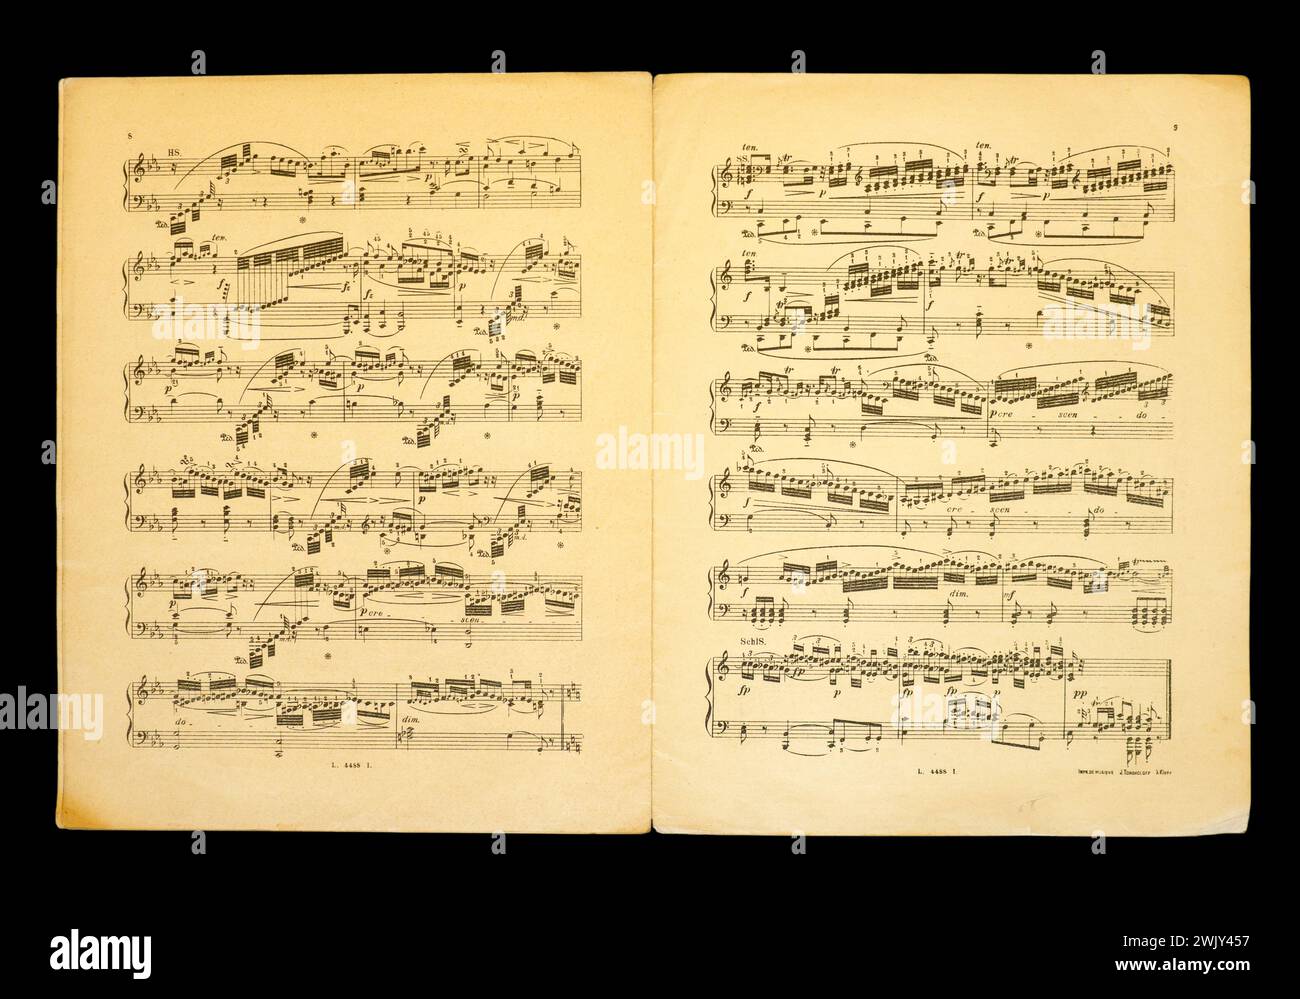 Spartiti "Fantasia in do minore" del compositore Wolfgang Amadeus Mozart. Foto Stock